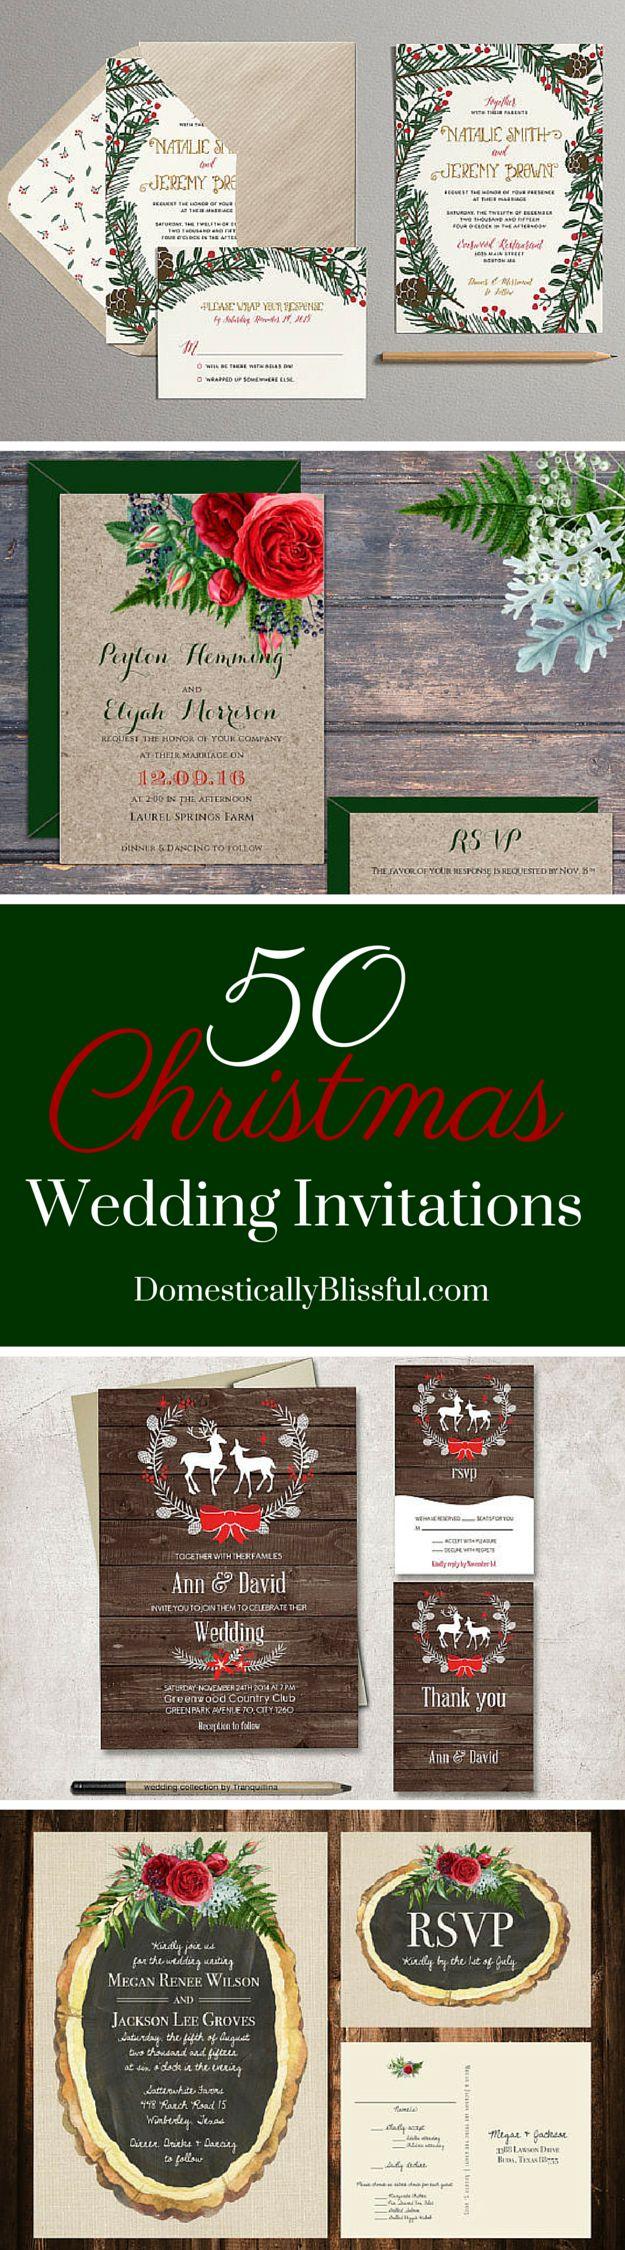 Wedding - 50 Christmas Wedding Invitations